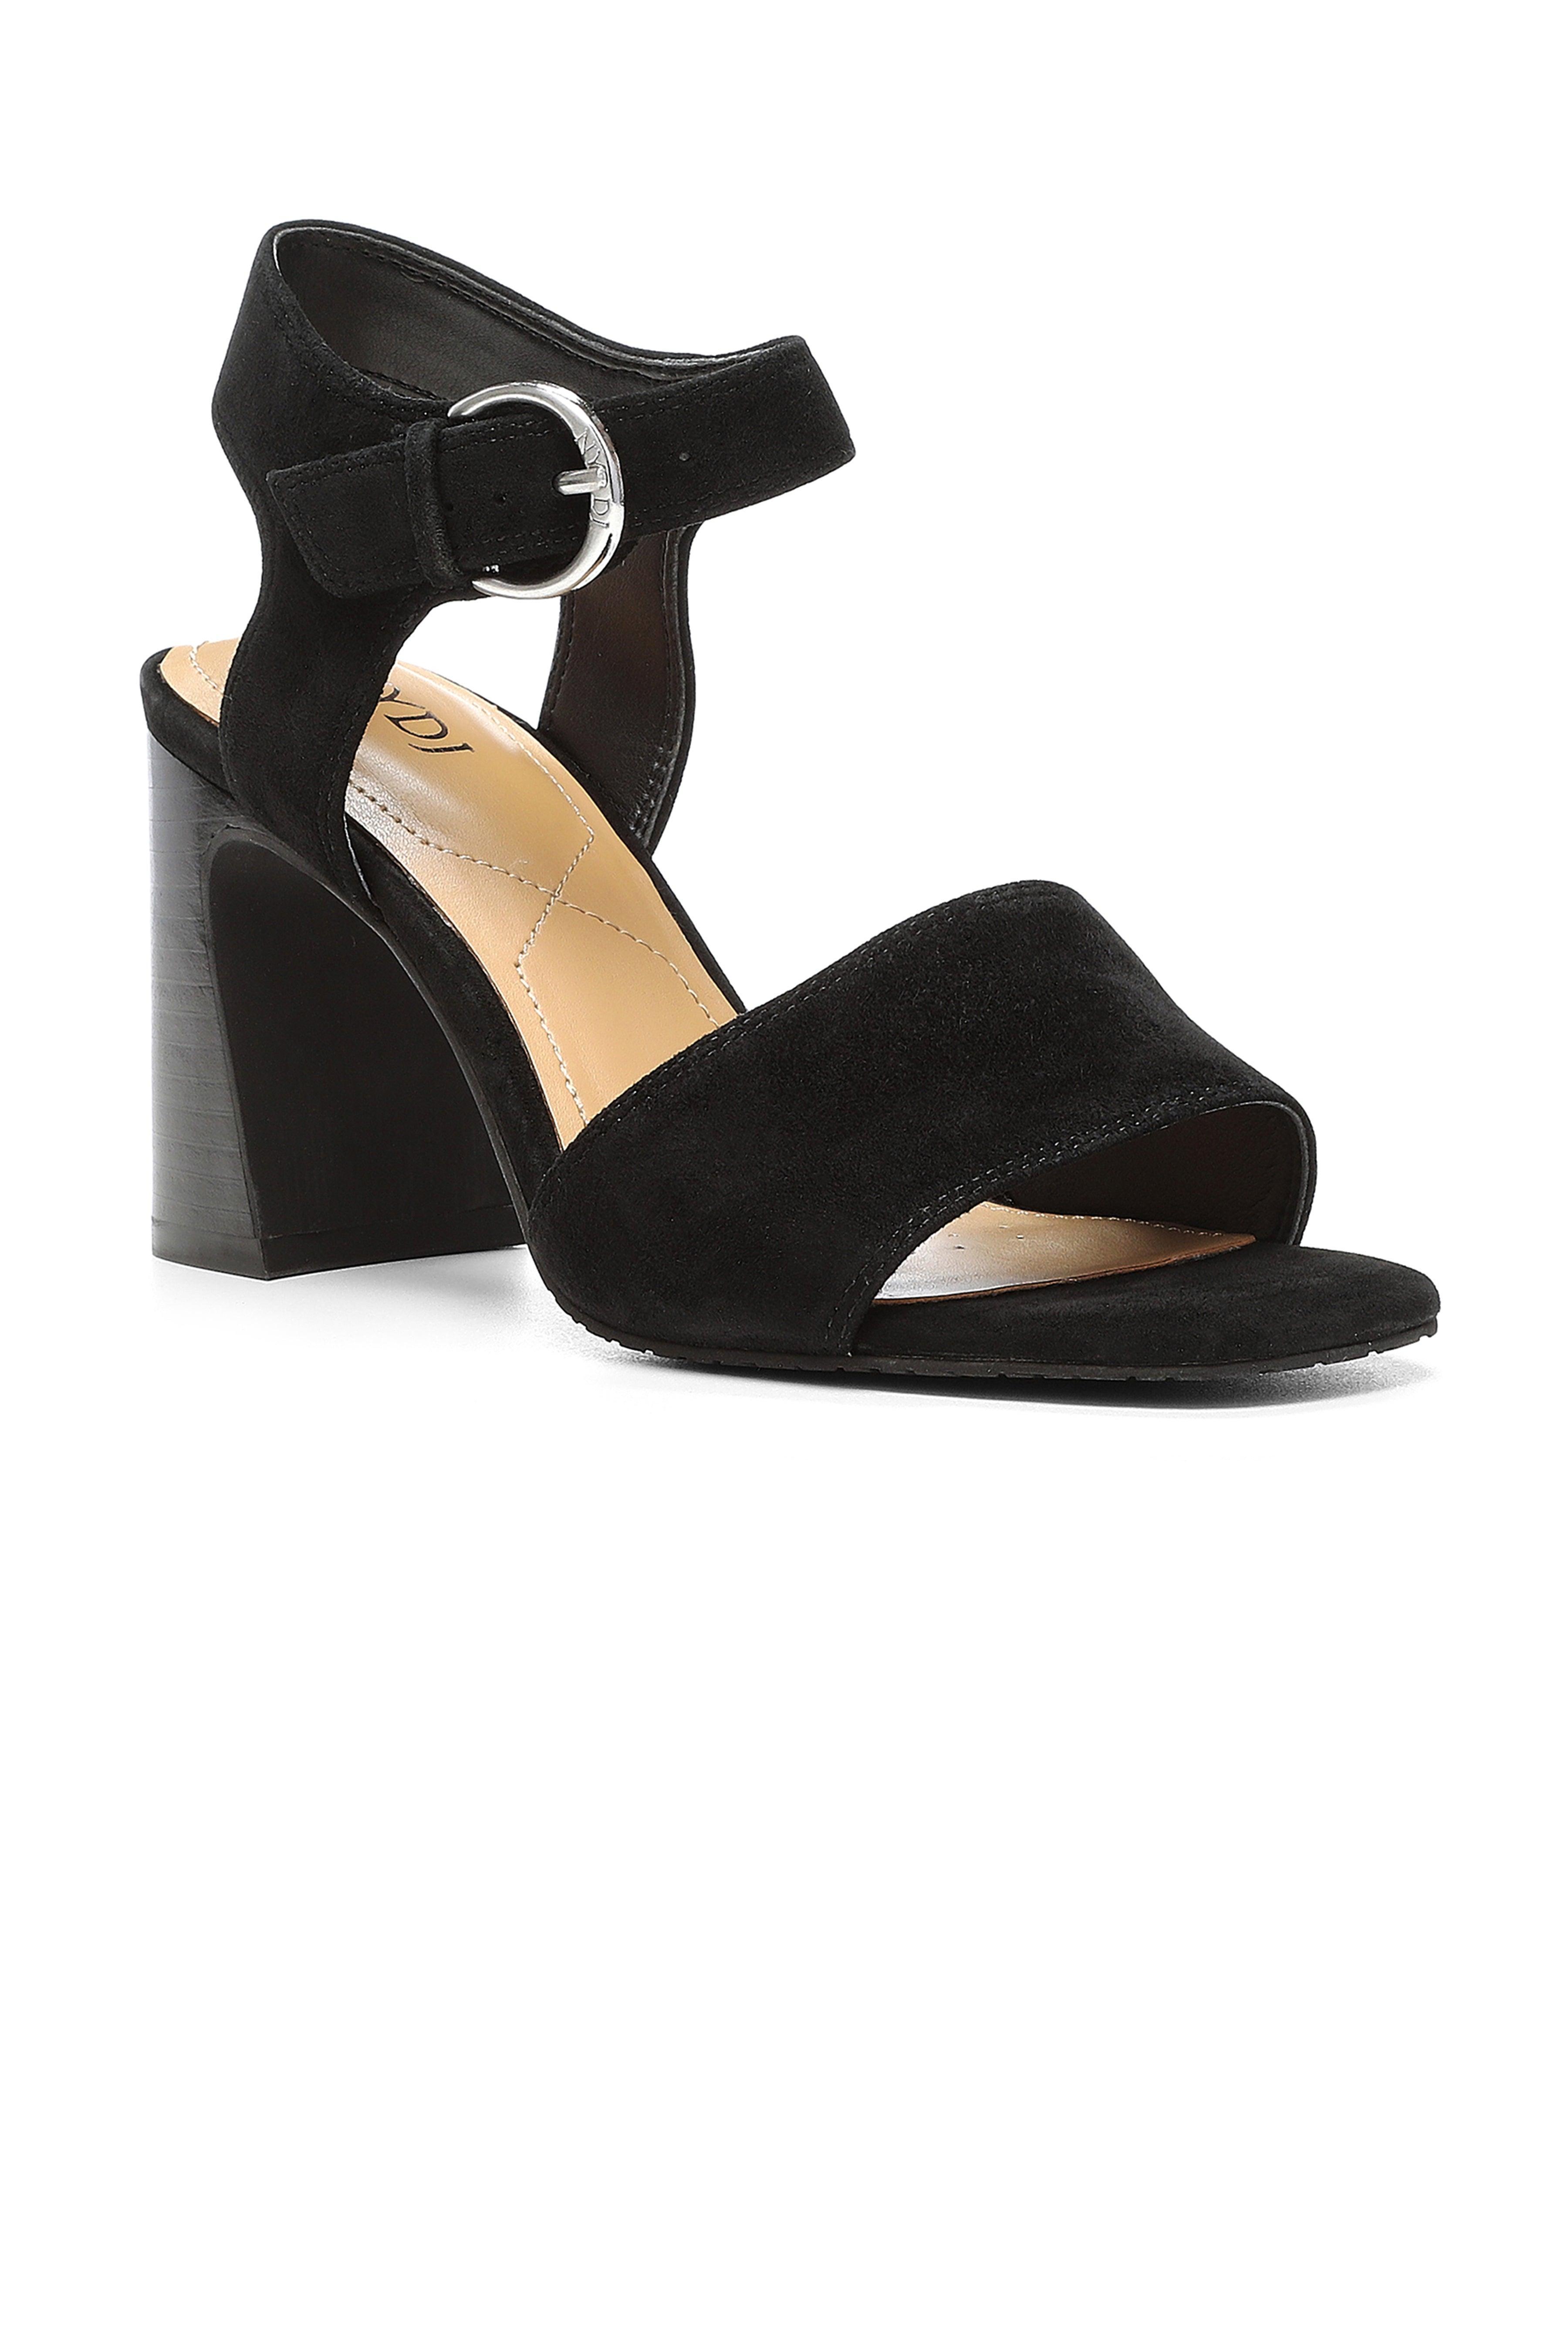 NYDJ Women's Liz Block Heel Sandals in Black, Regular, Size: 5   Leather/Denim Product Image